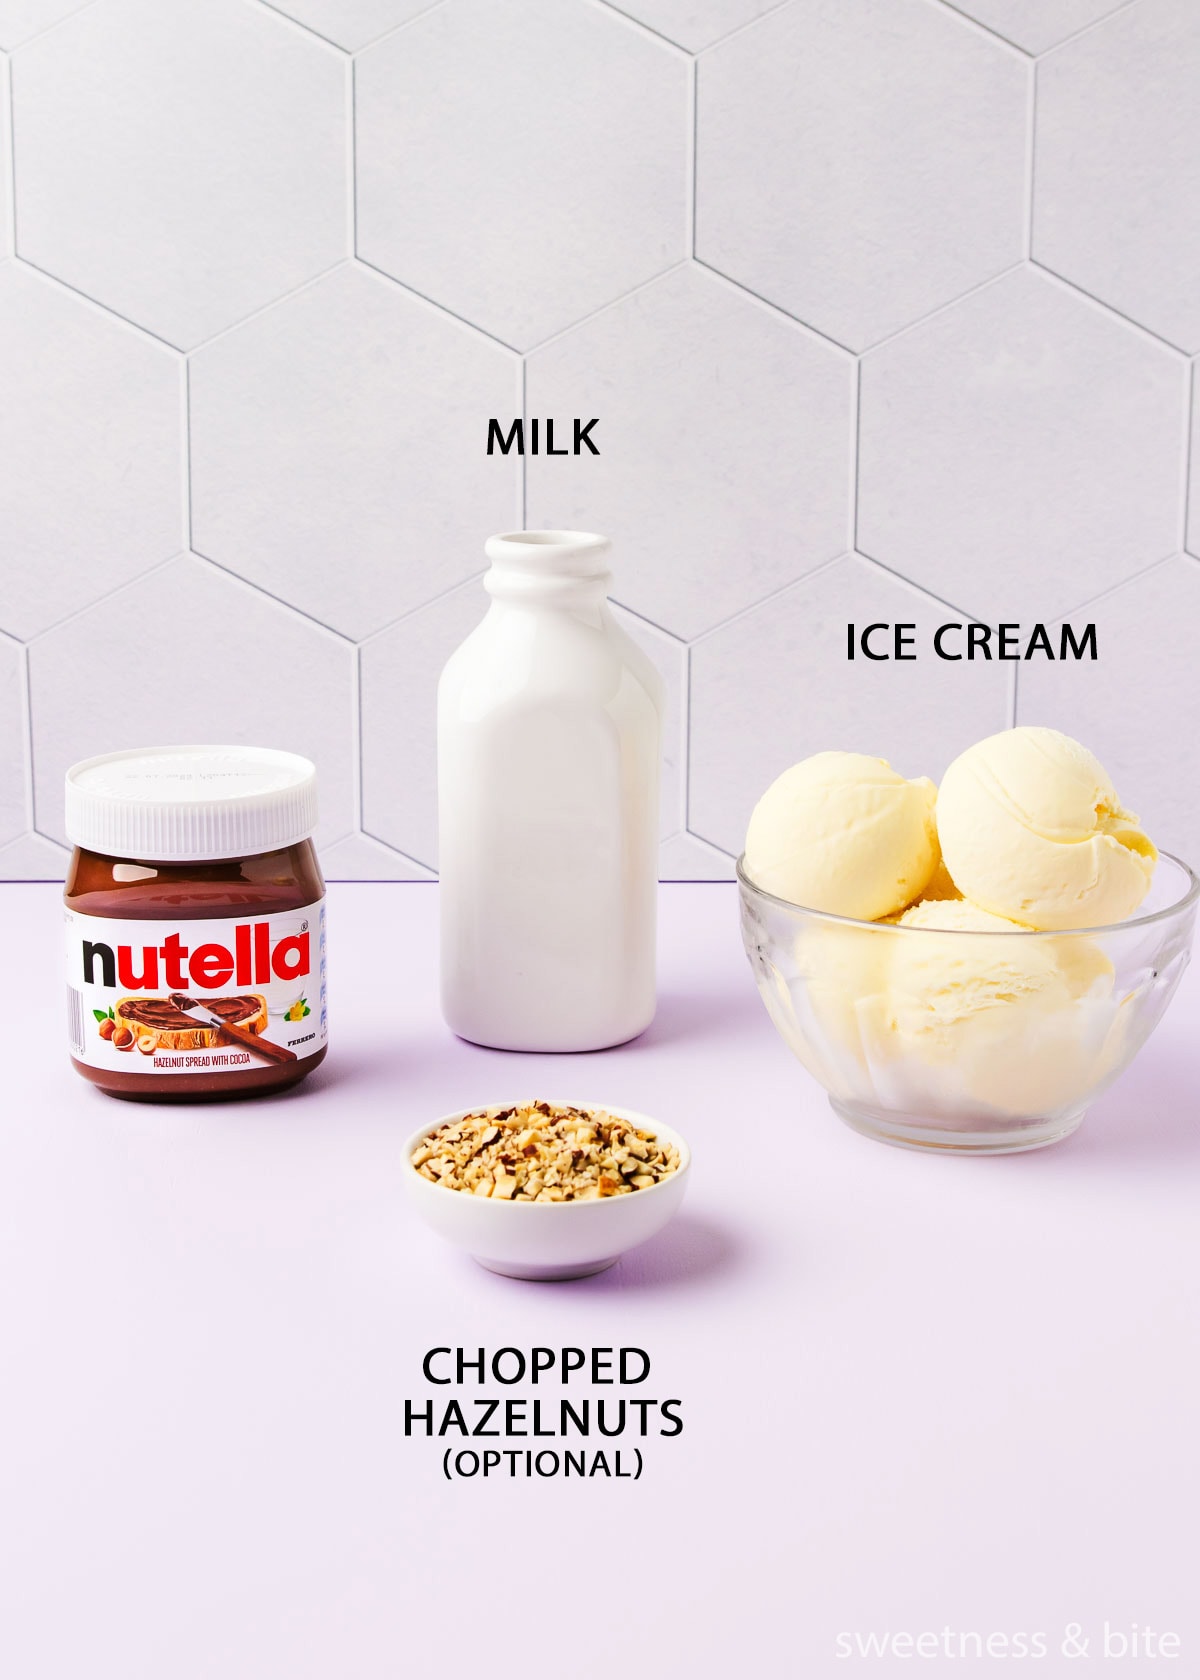 The milkshake ingredients - Nutella, vanilla ice cream, milk and chopped hazelnuts, on a pale purple background. 